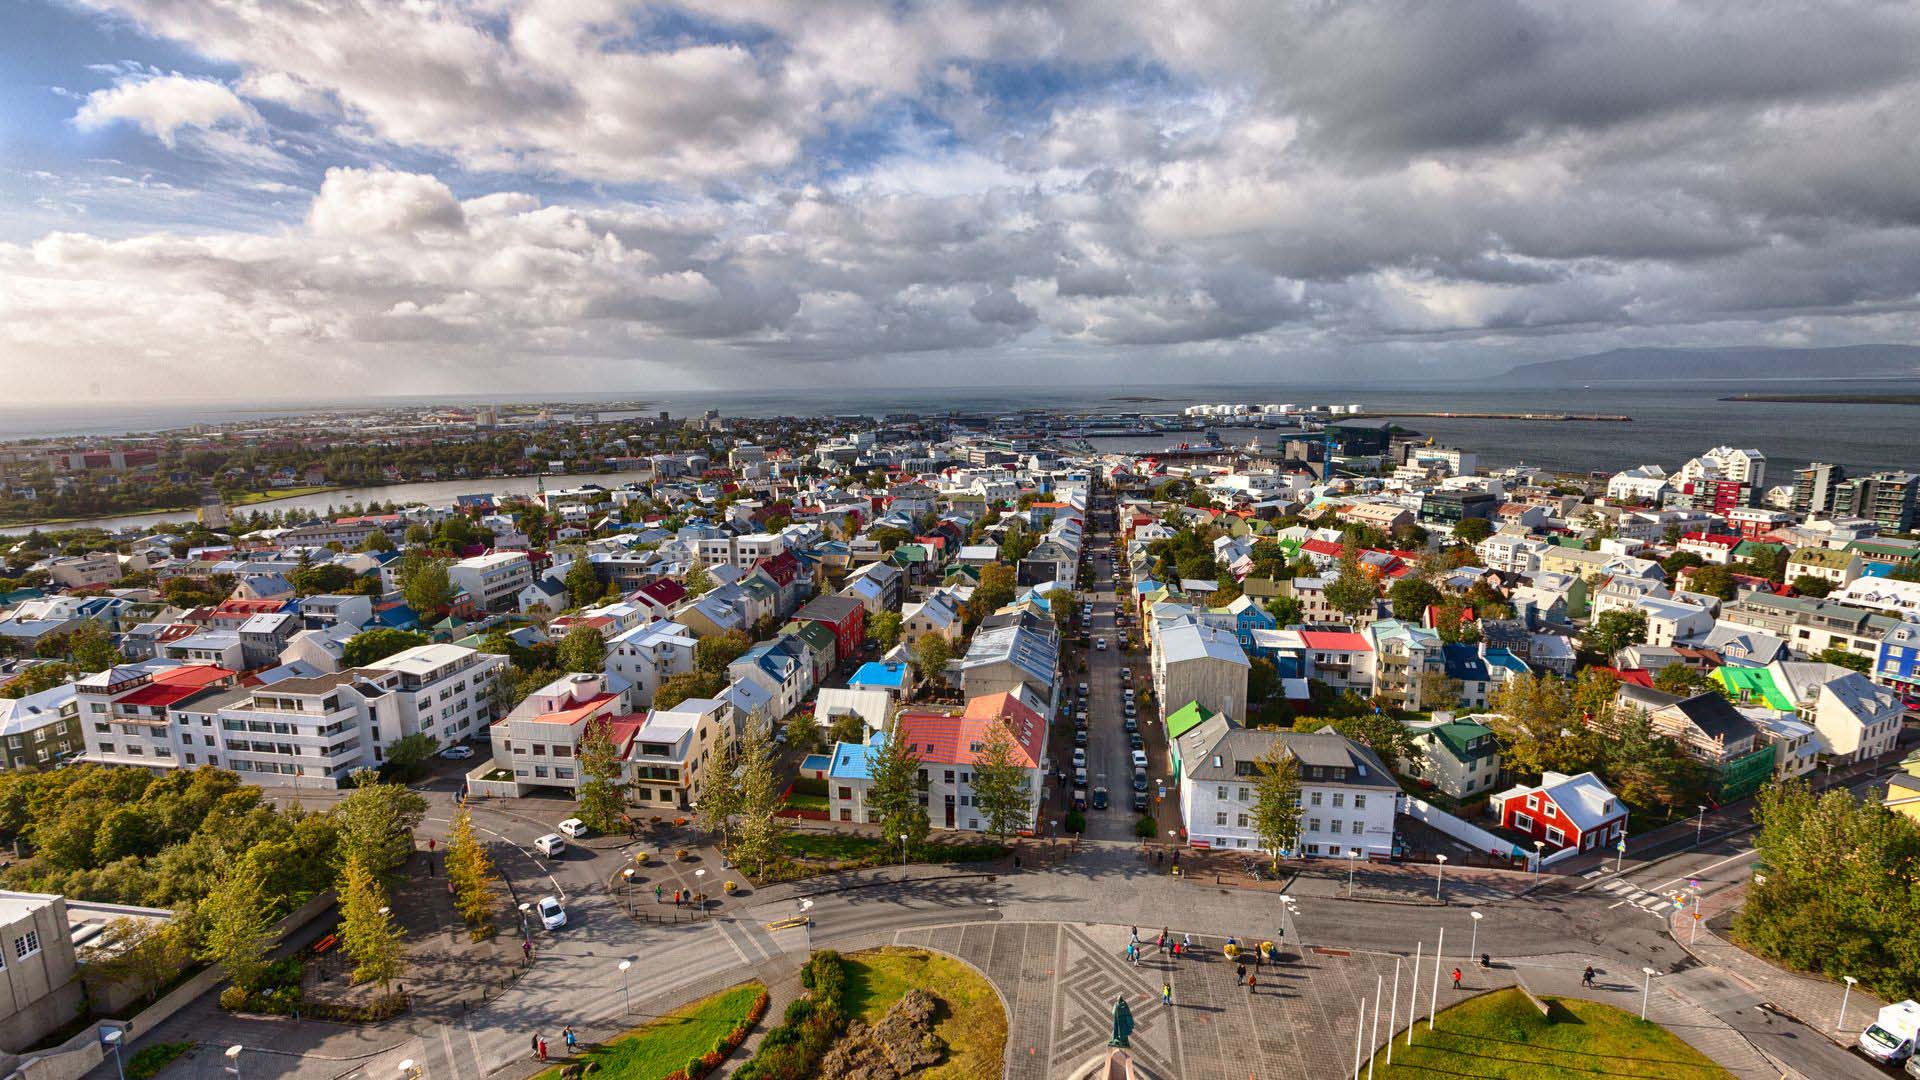 Reykjavik houses Iceland - depositphotos